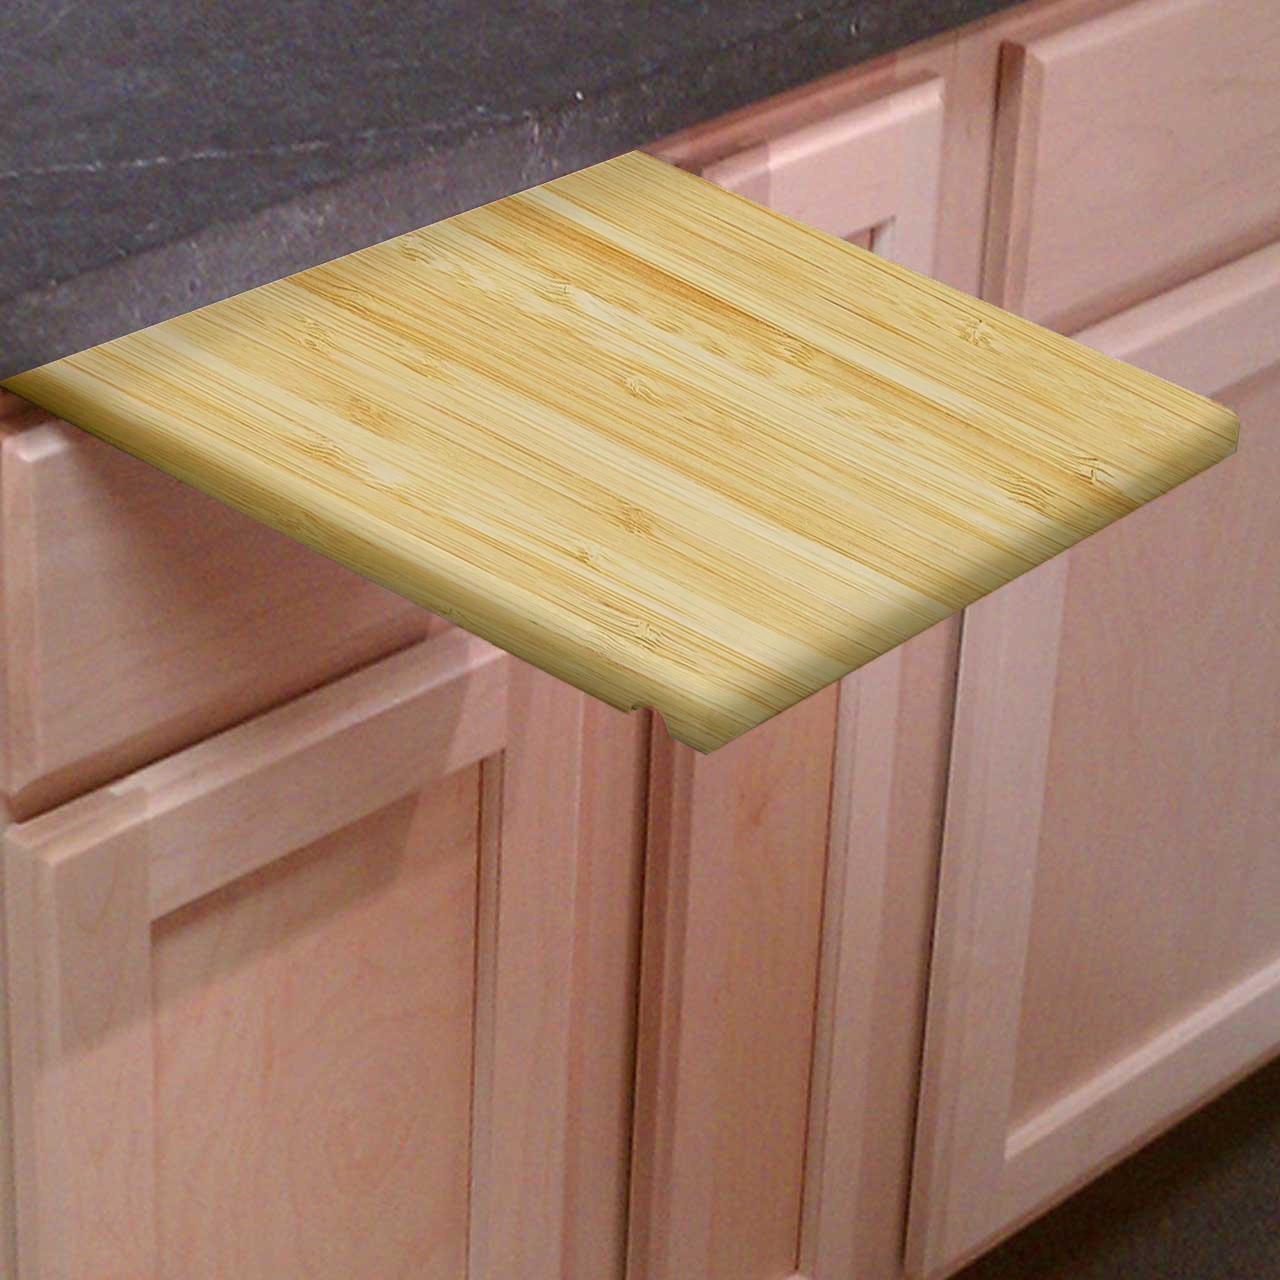 17 Inch Bamboo Cutting Board For Kitchen Sink